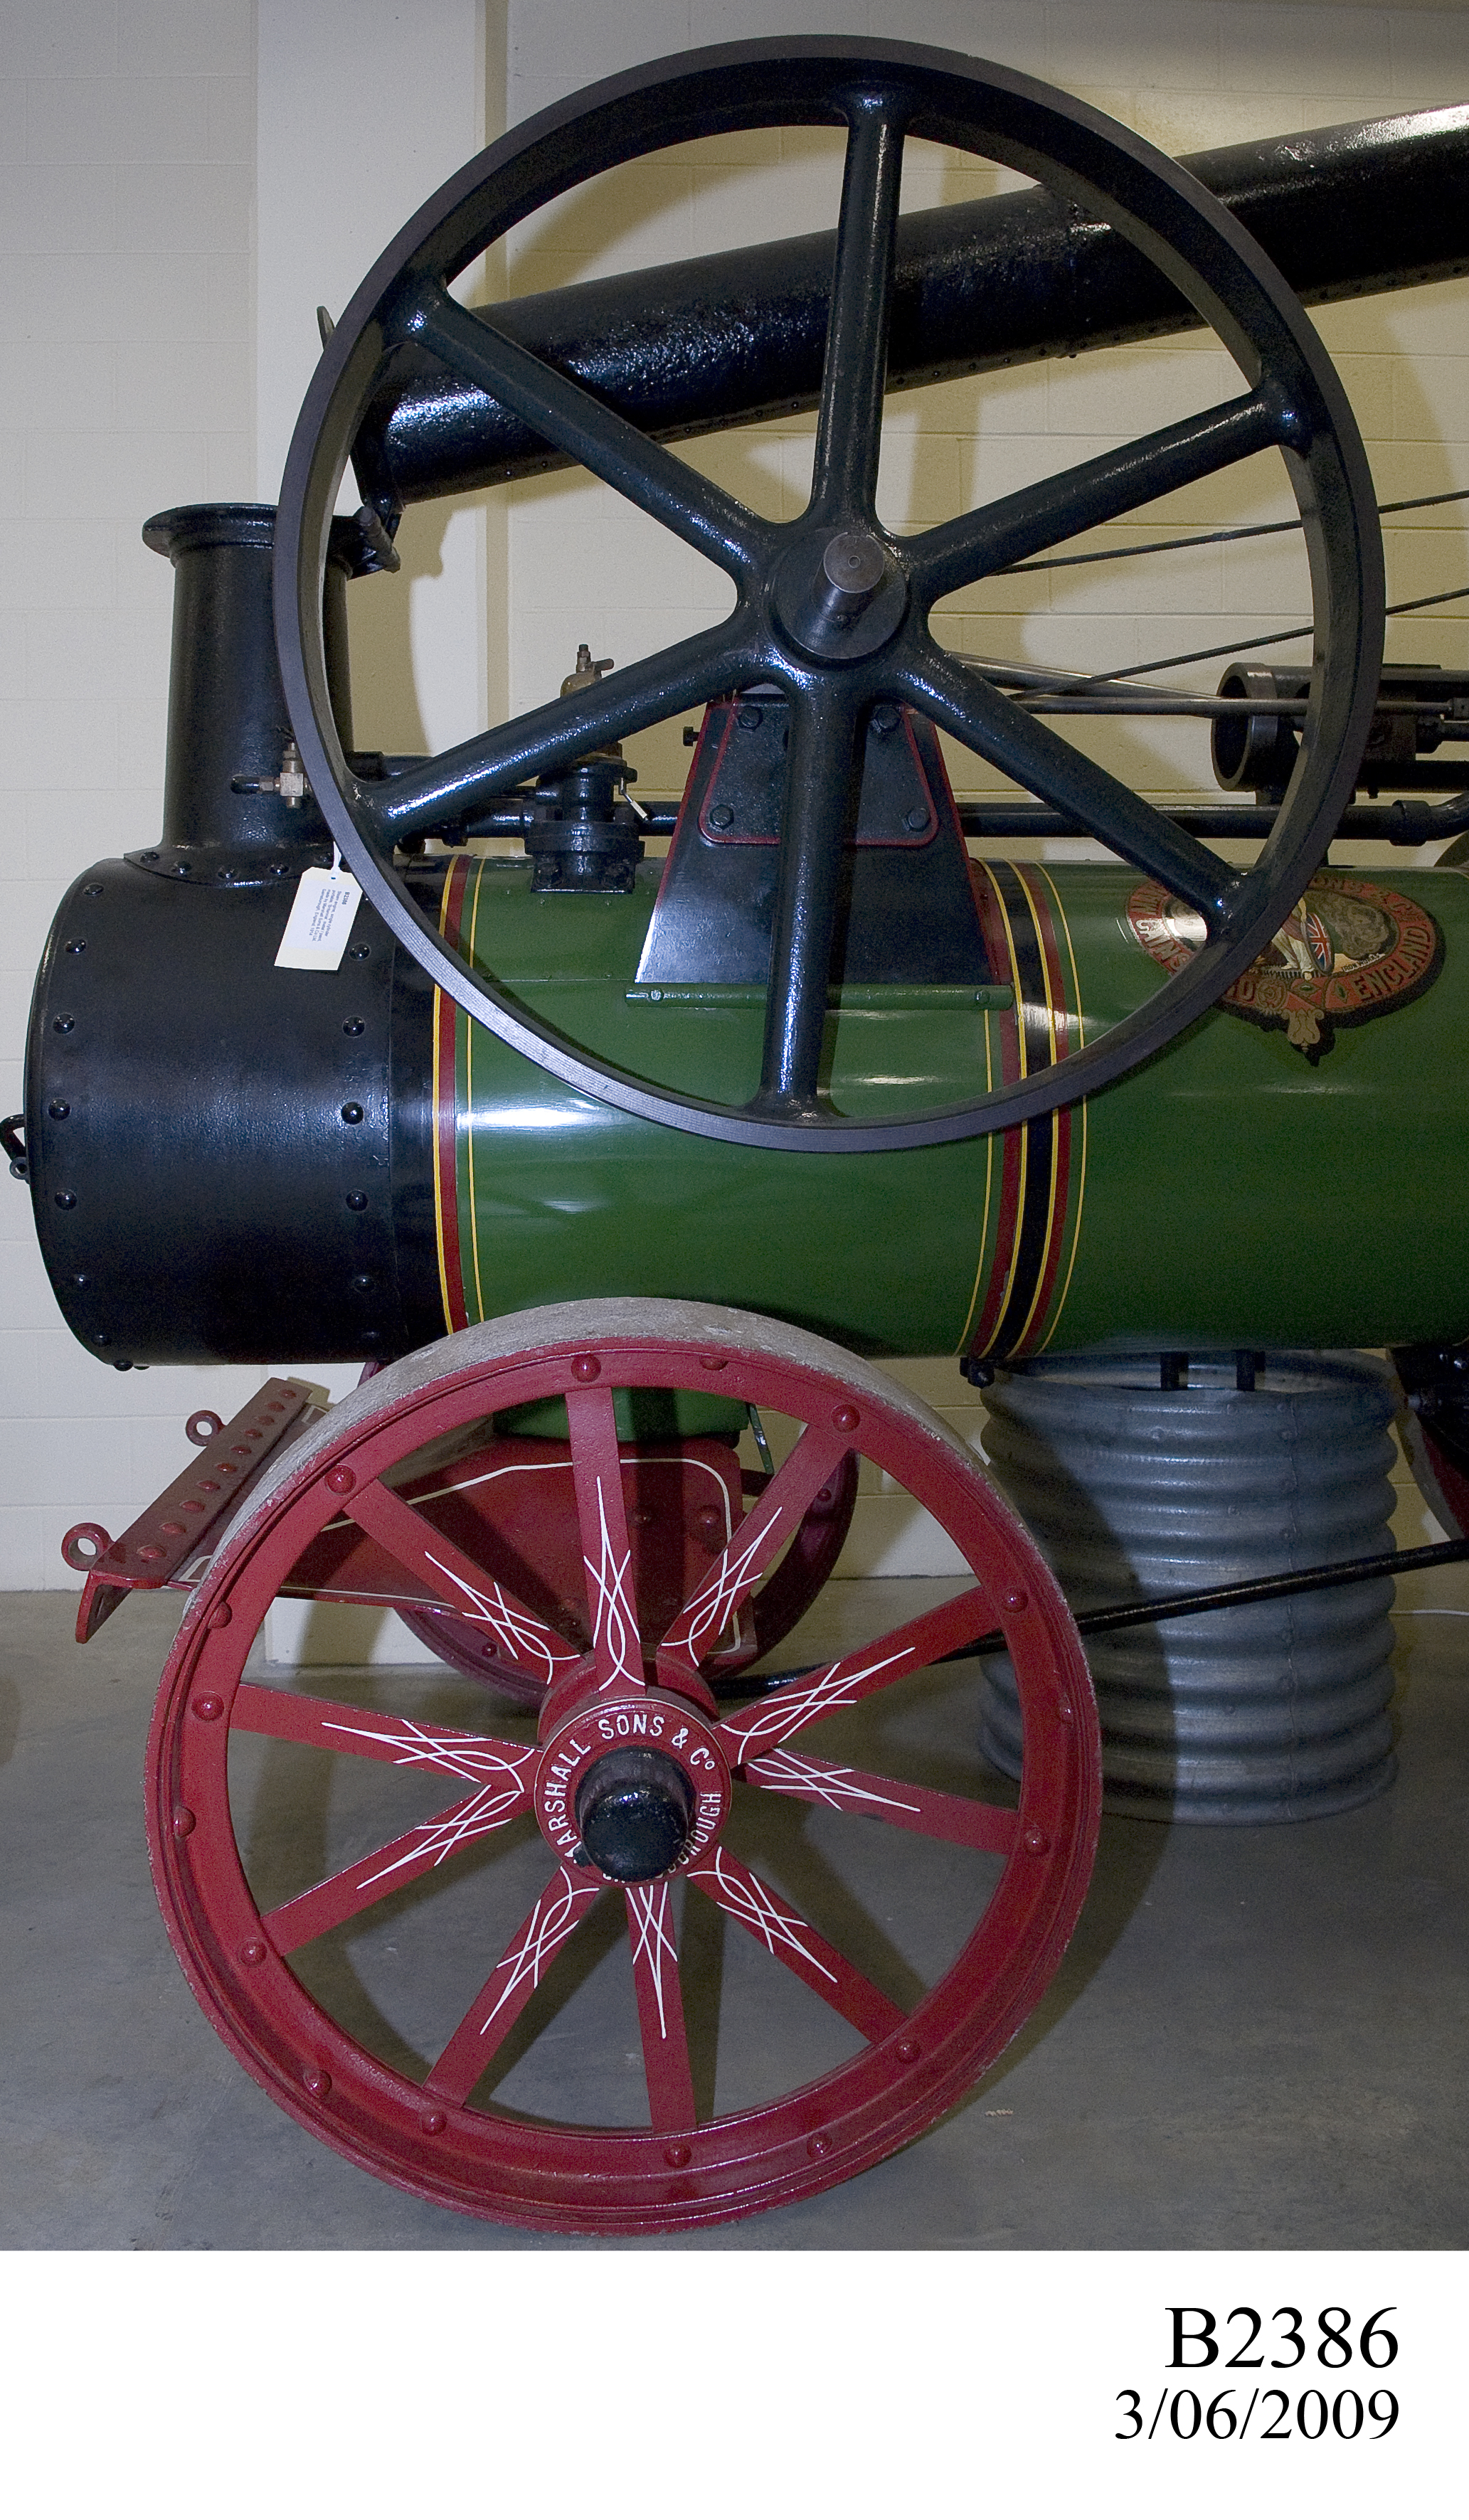 Marshall 'Britannia' portable steam engine